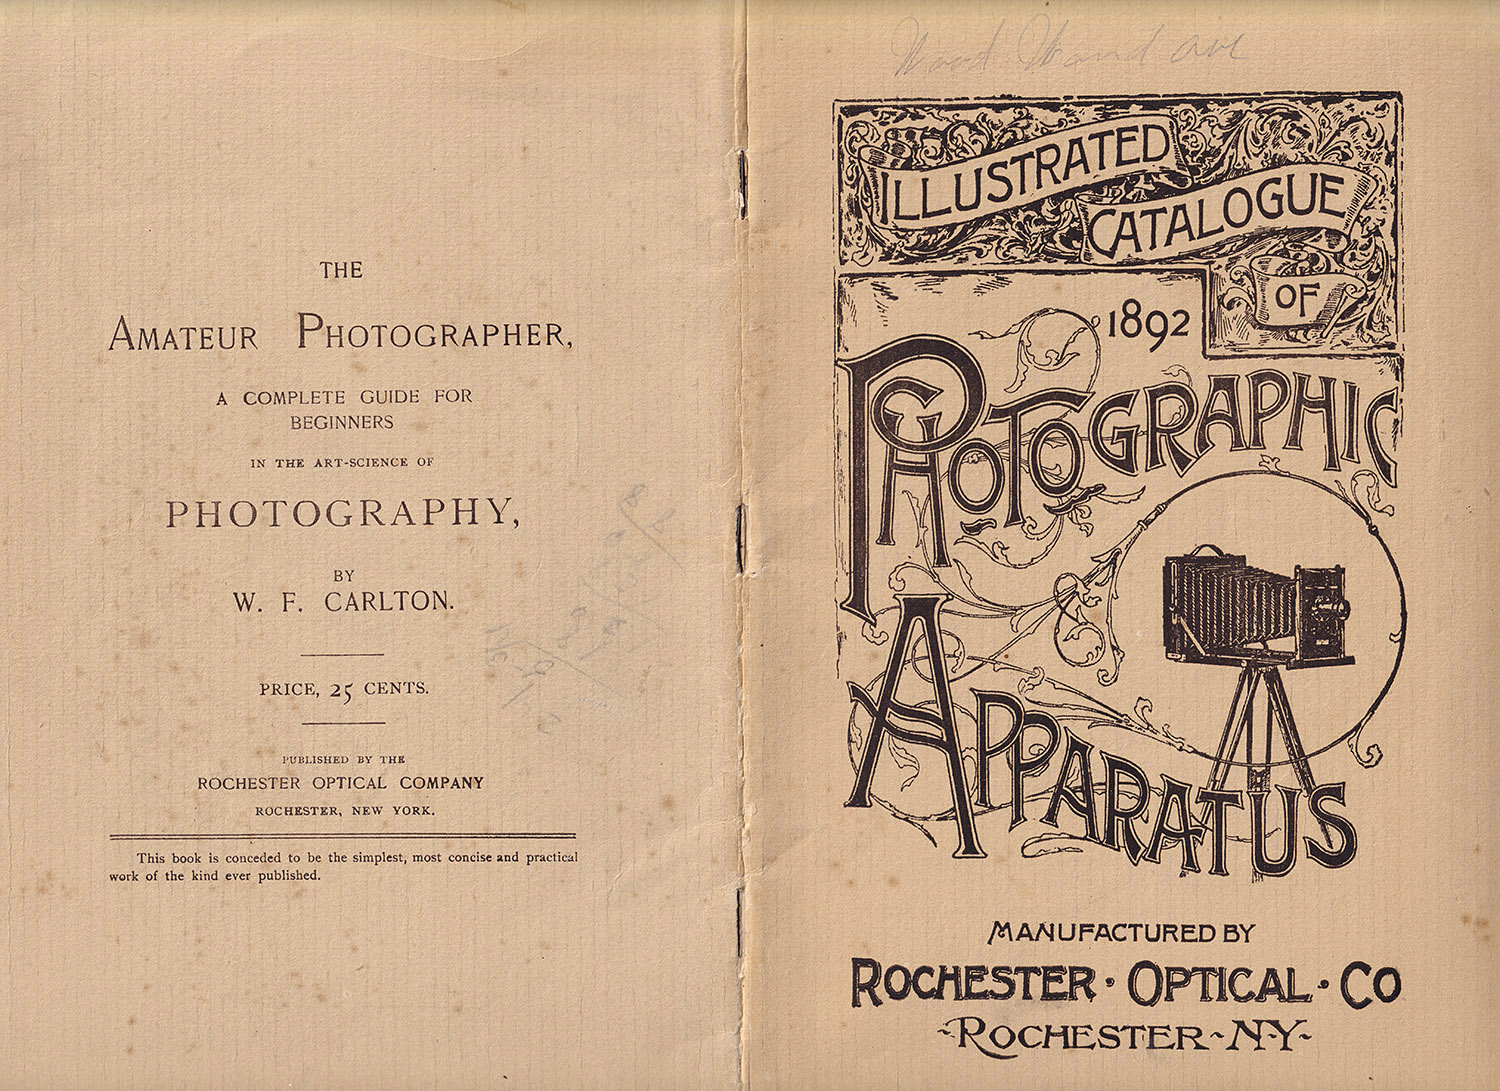 1309.roch.opt.co.1892-covers-1500.jpg